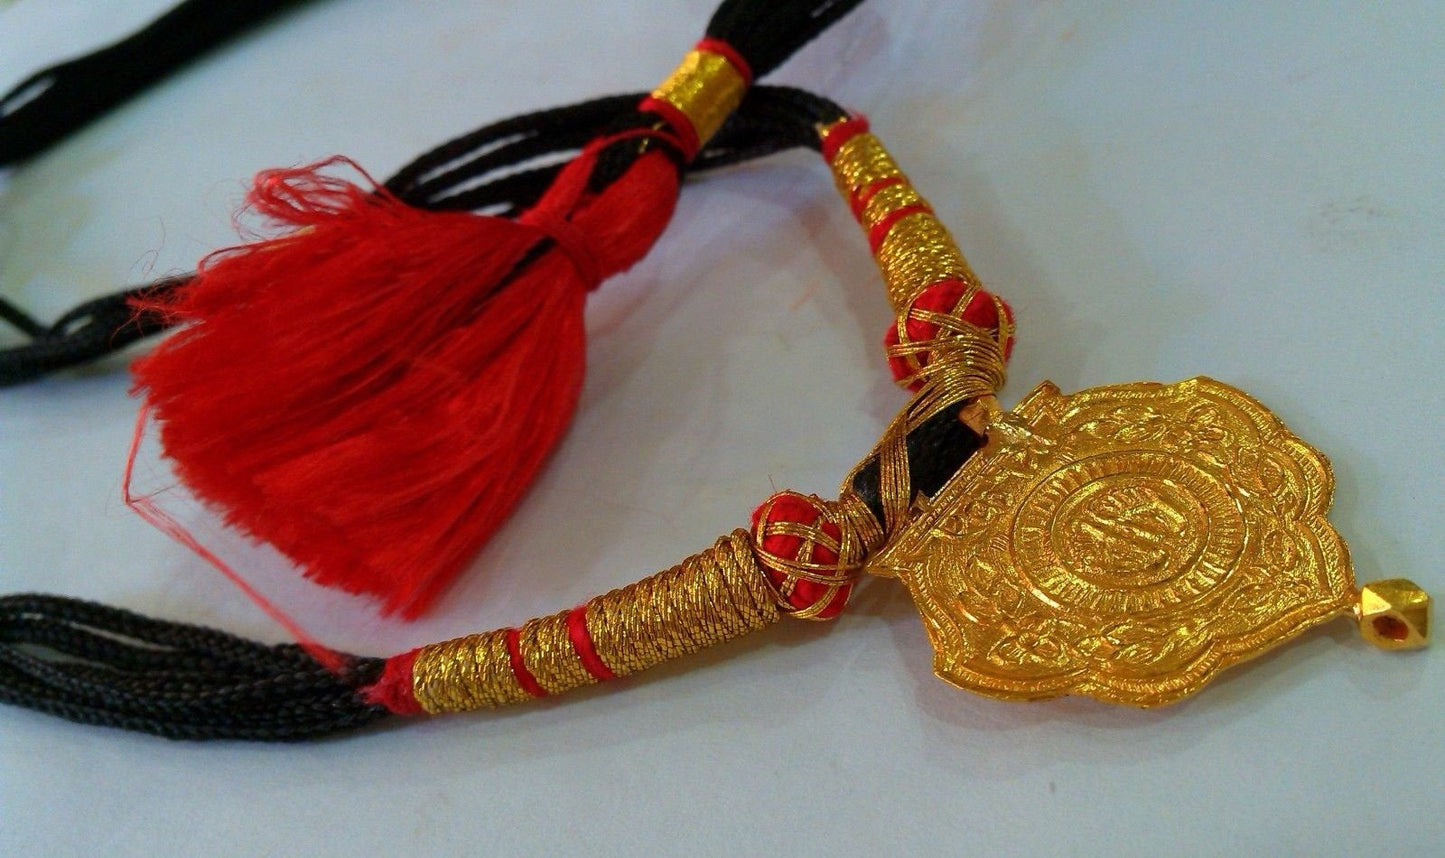 22kt yellow gold handmade fabulous tribal pendant shree nathji print pendant antique ethnic tribal jewelry from rajasthan india - TRIBAL ORNAMENTS